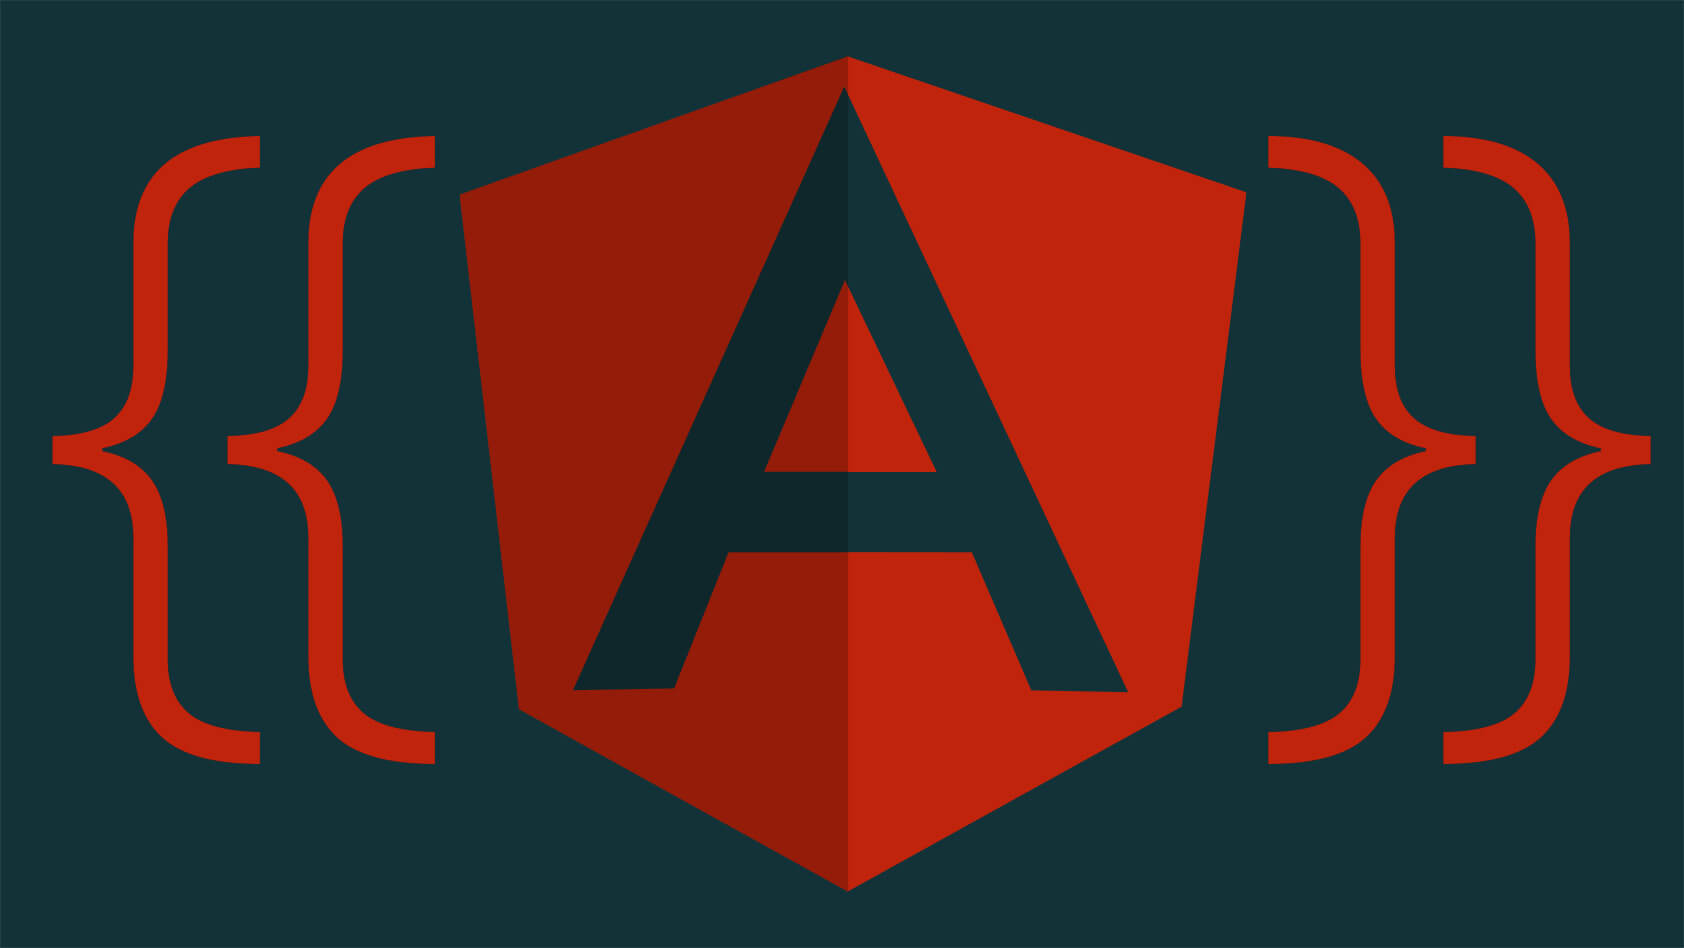 AngularJS Development